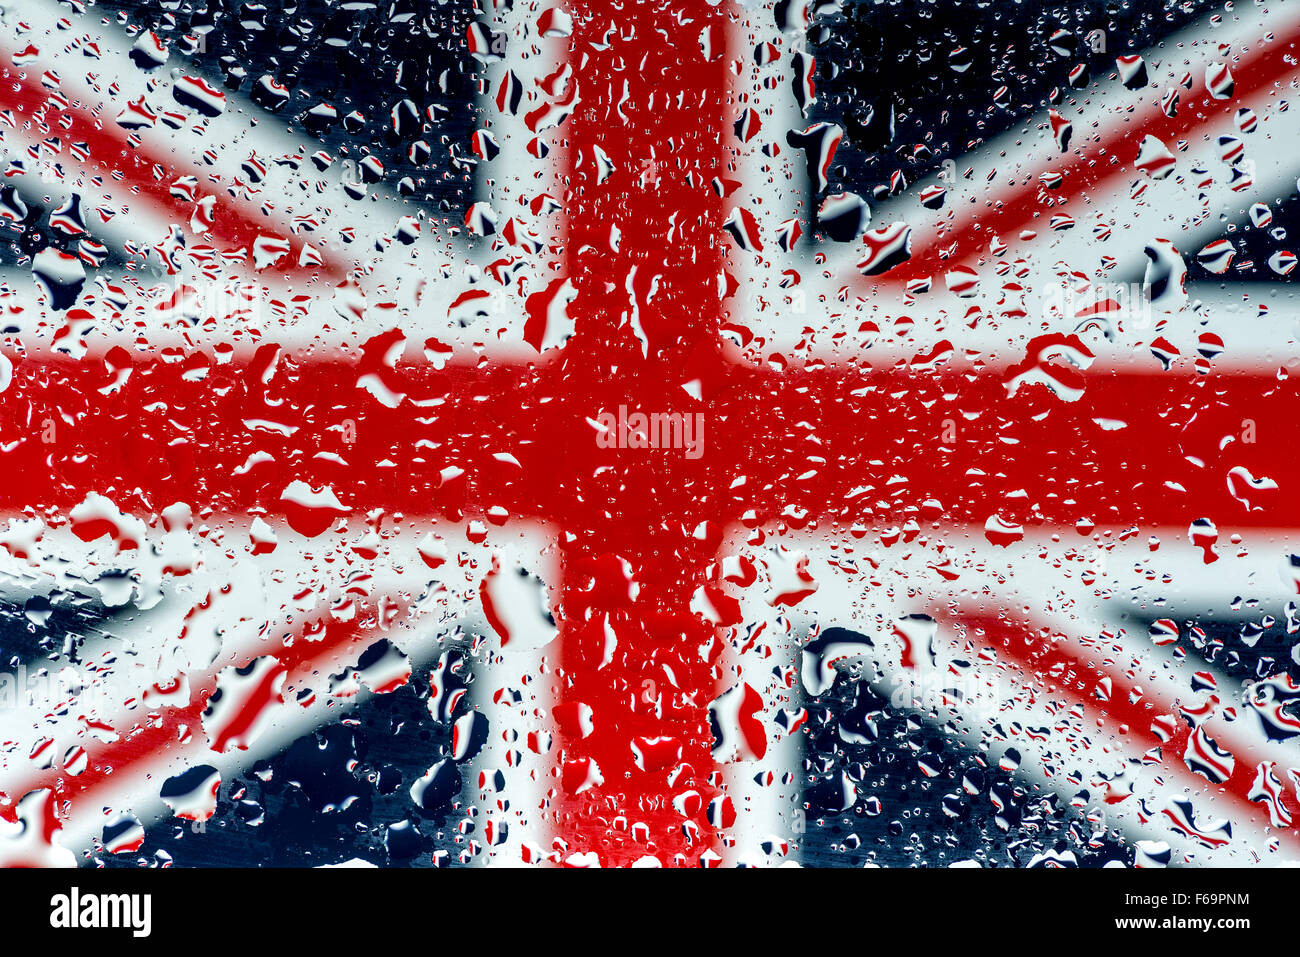 United Kingdom's Union Jack flag seen through a rainy window Stock Photo